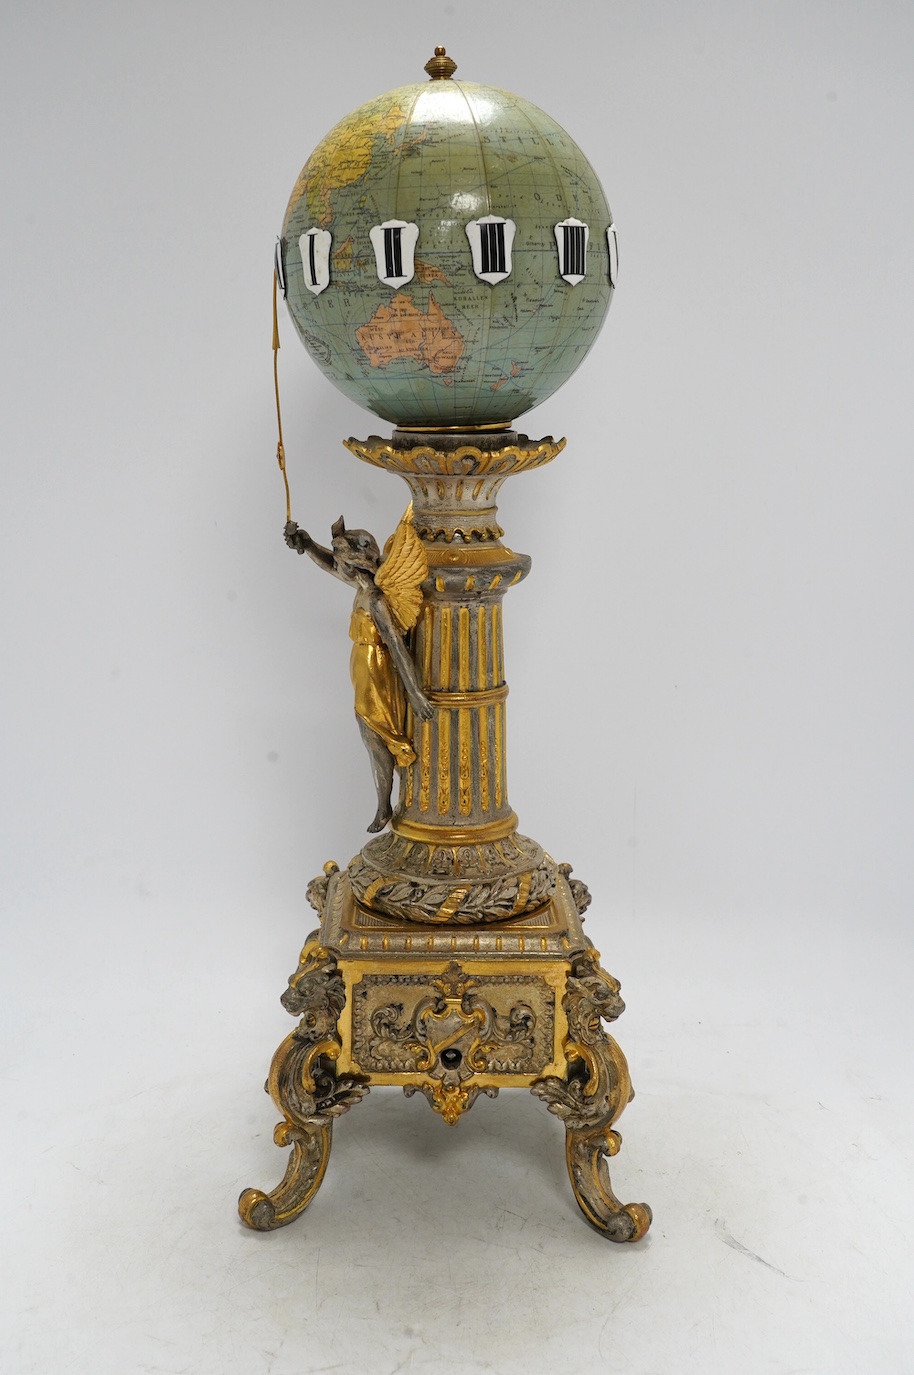 A late 19th century German Columbus Erdglobus globe timepiece, 49cm high. Condition - fair